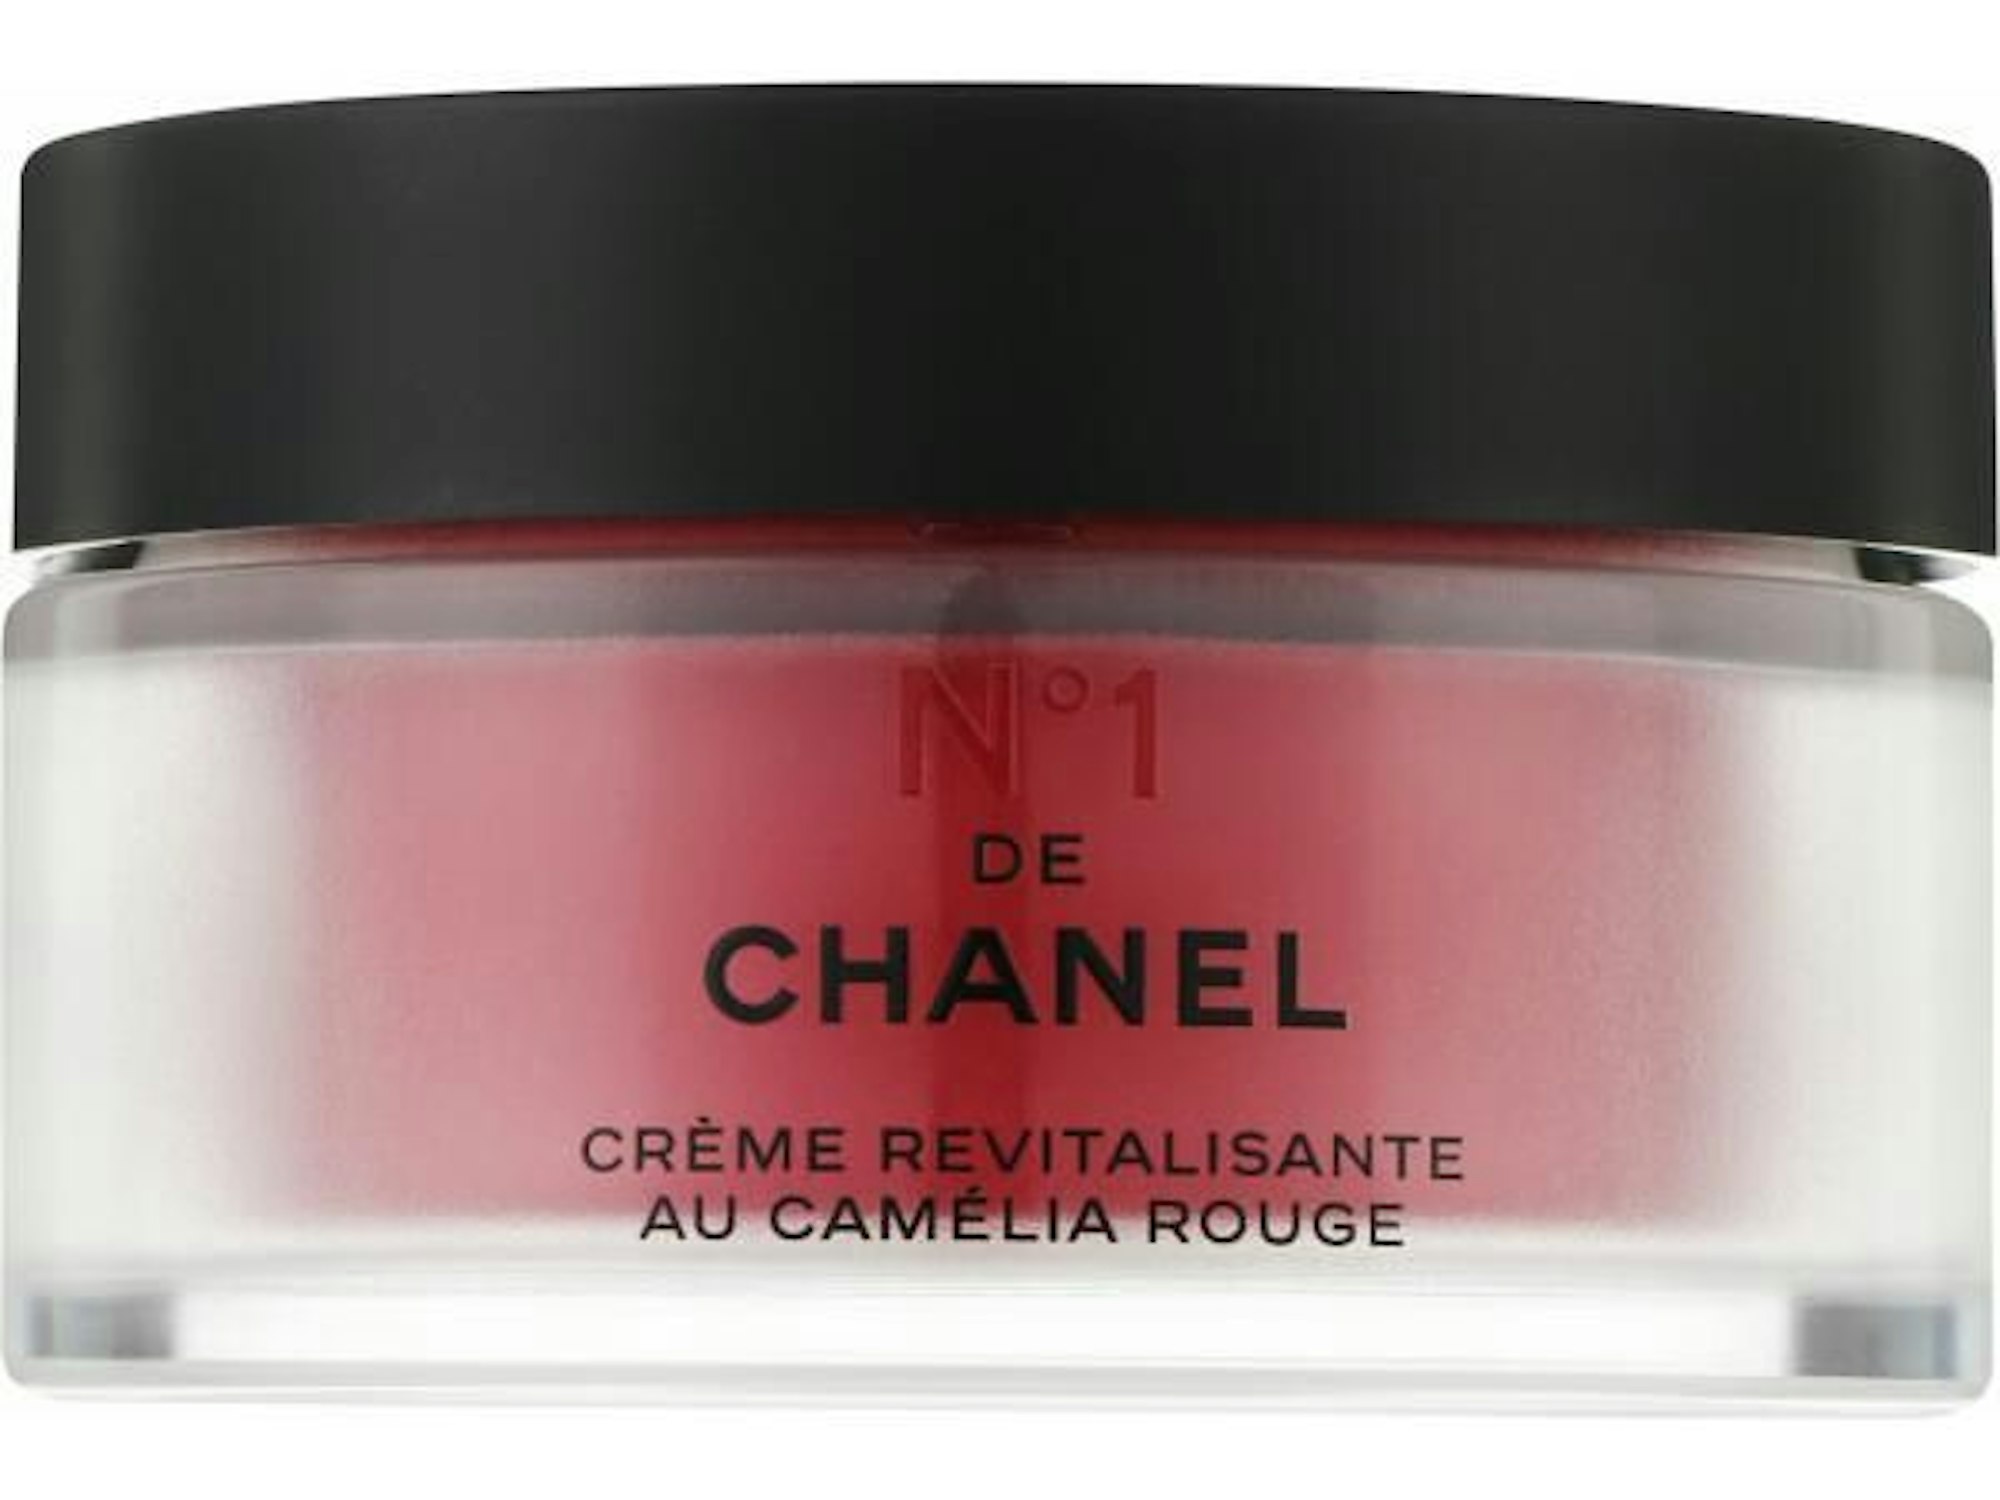 Chanel No 1 Creme Riche Revitalisante au Camelia Rouge, Pflegecreme mit Refill, 98 Euro bzw. 83 Euro Refill
